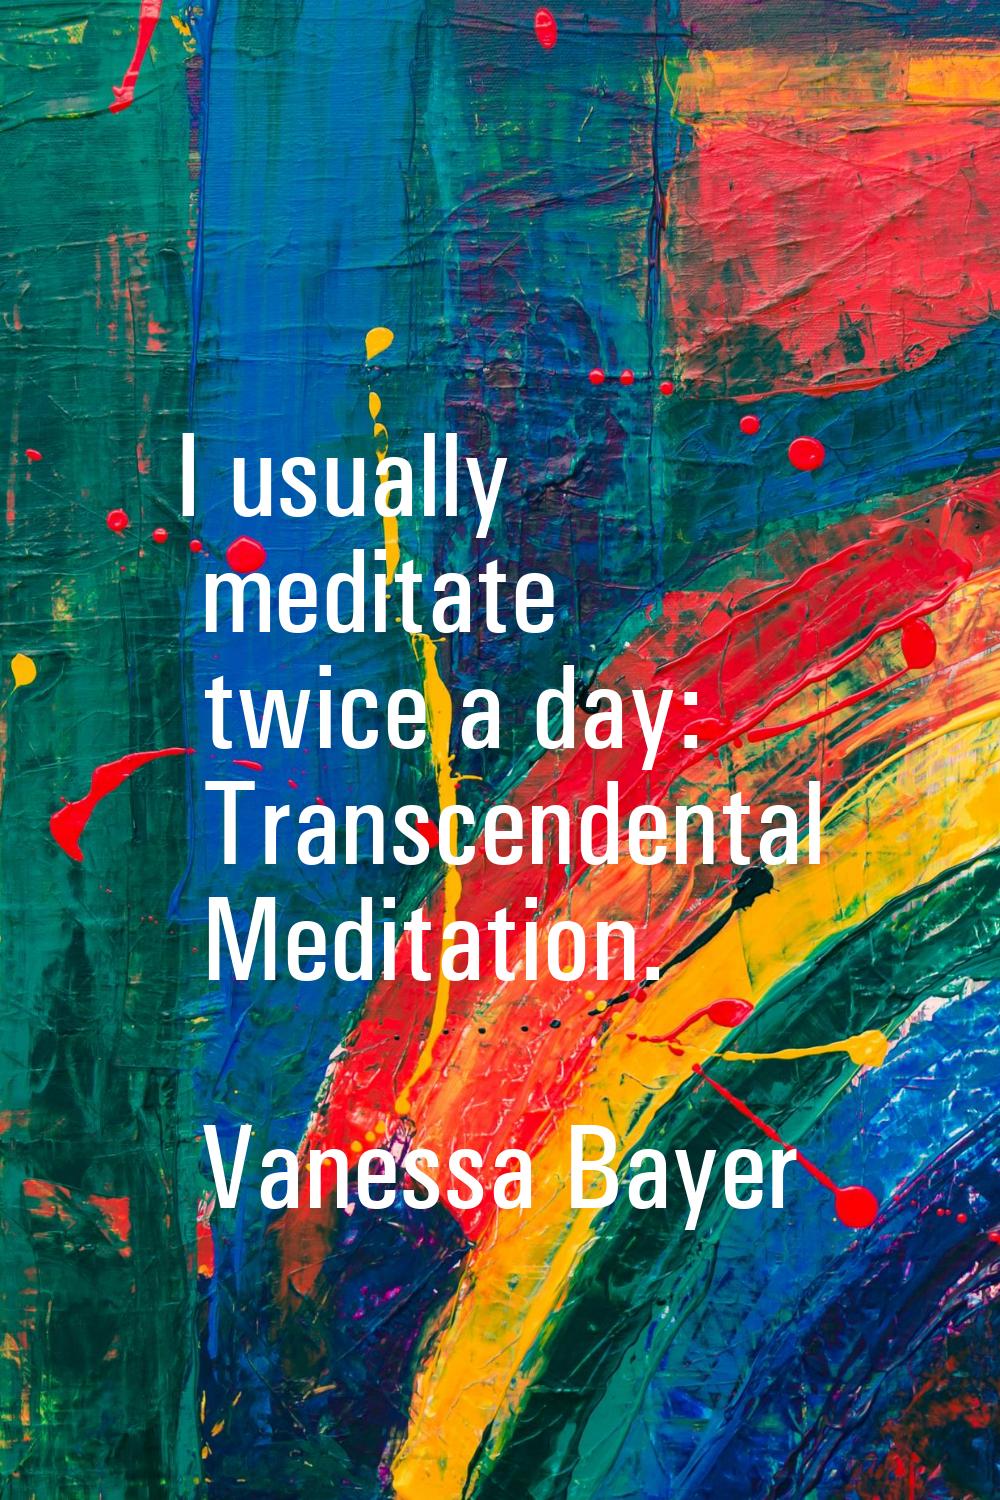 I usually meditate twice a day: Transcendental Meditation.